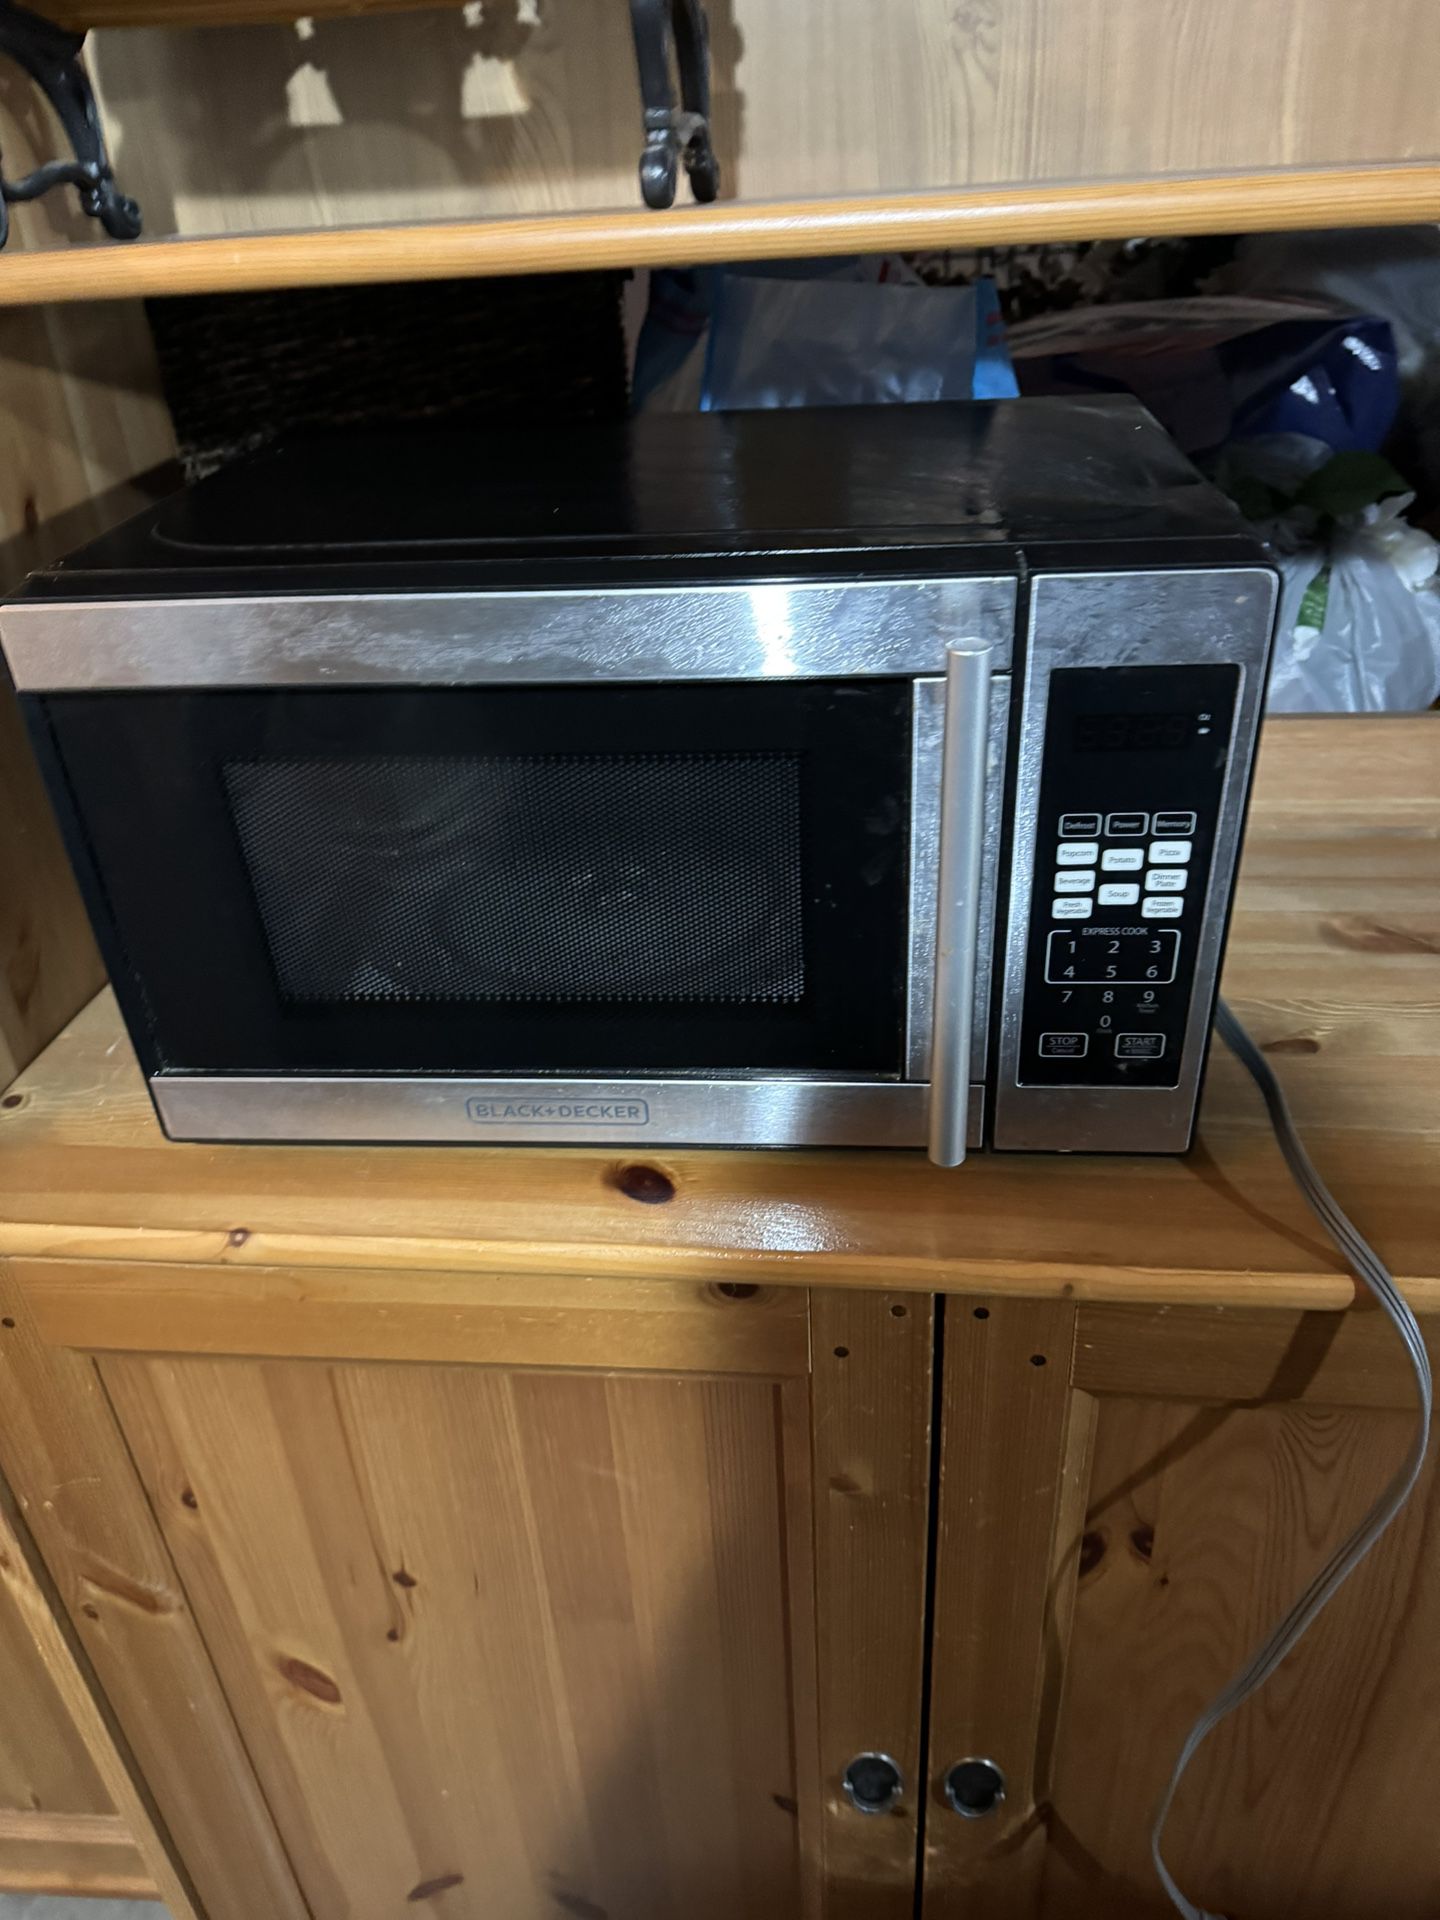 Microwave (Black+Decker)